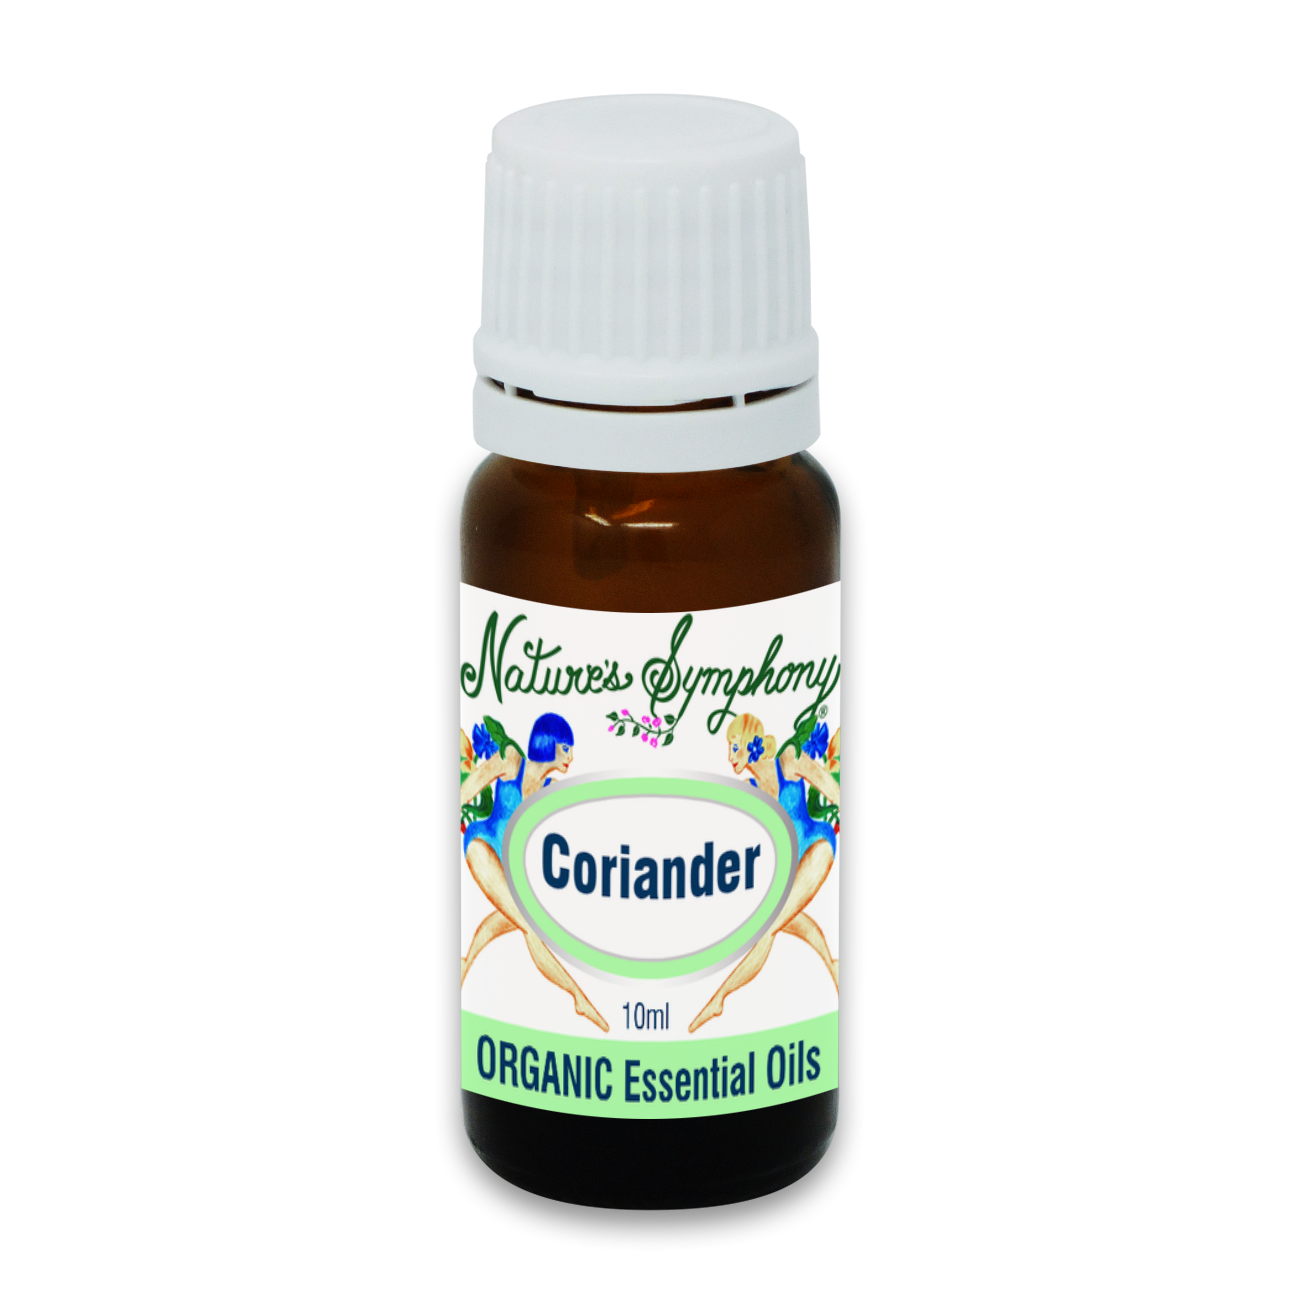 Coriander, Organic/Wildcrafted oil - 10ml